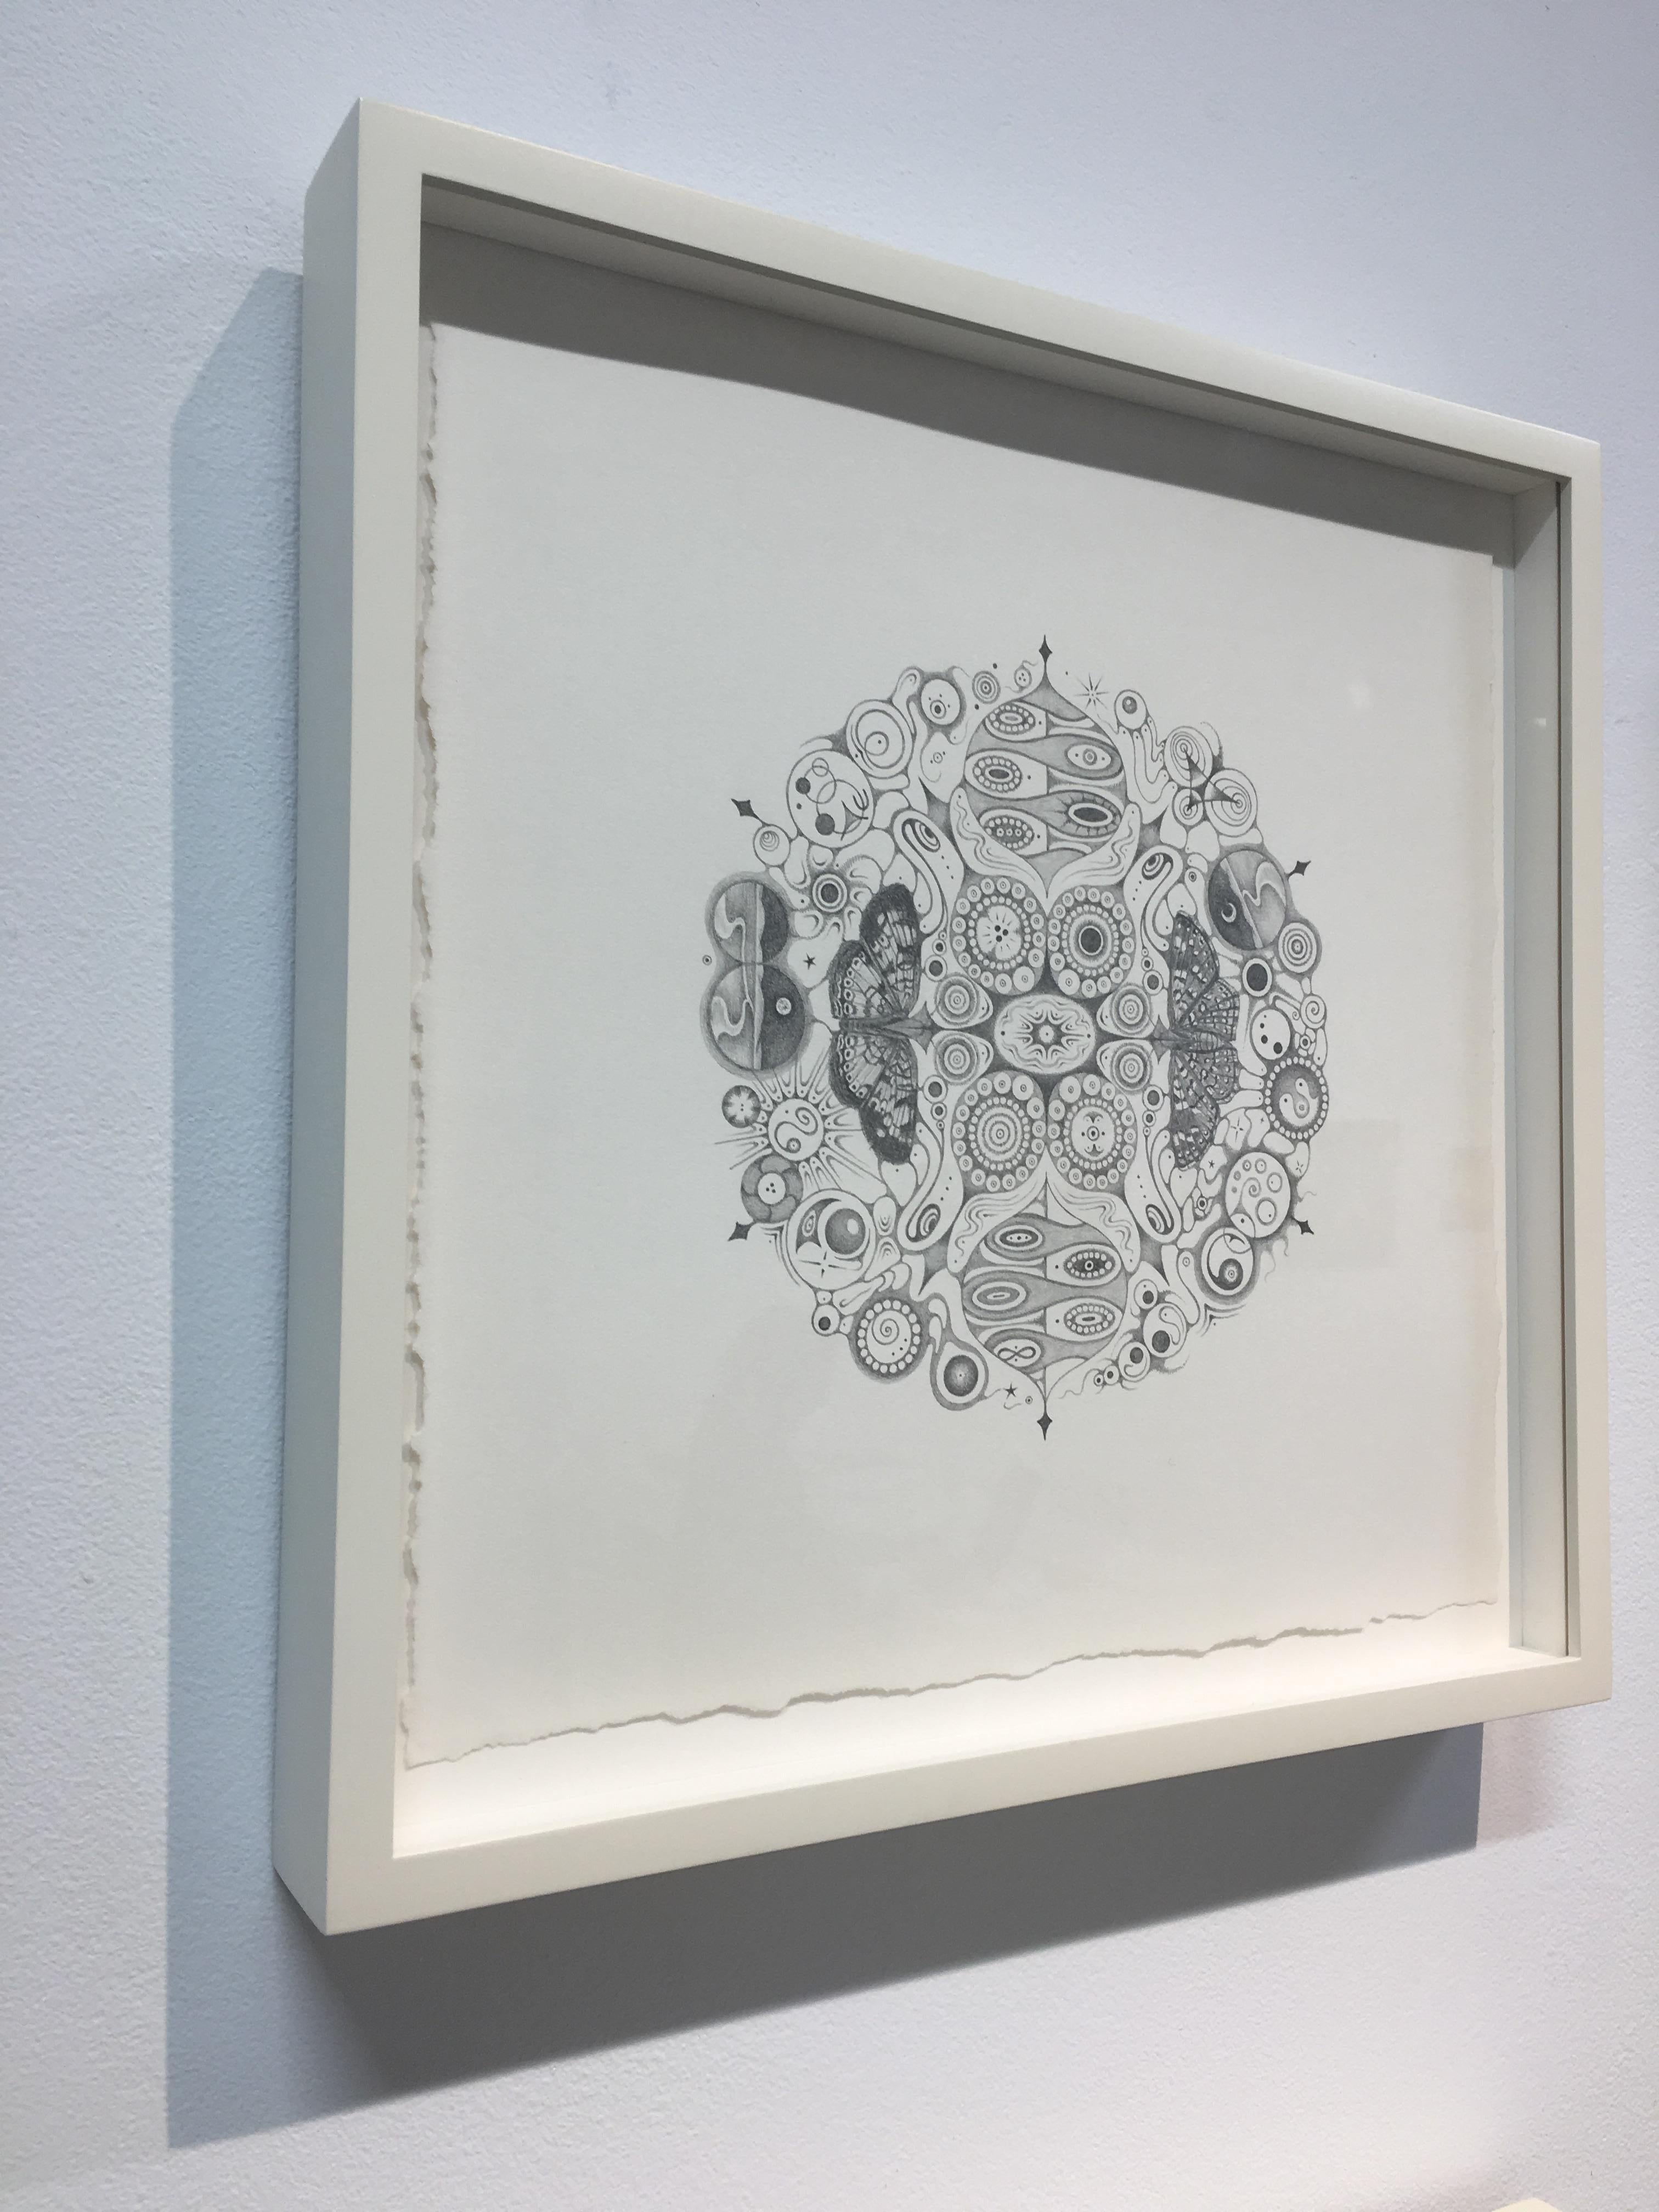 Snowflakes 146 Joy, Mandala Pencil Drawing with Butterflies, Landscapes, Pattern - Art by Michiyo Ihara